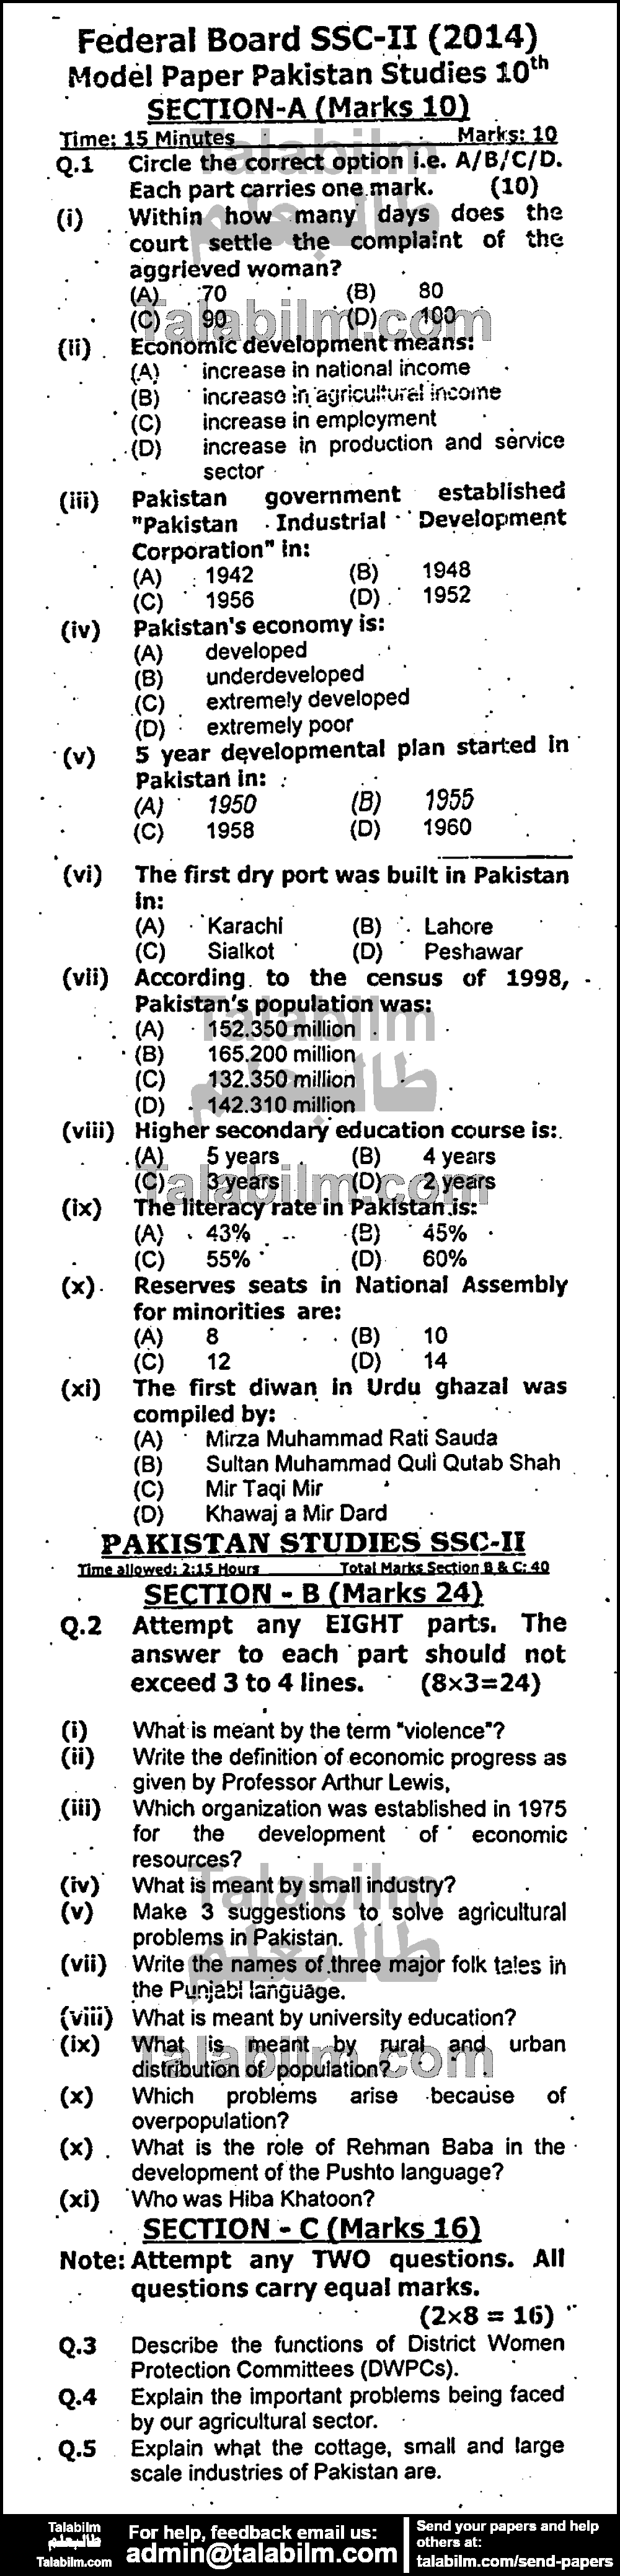 Pak Studies 0 past paper for 2014 Group-I